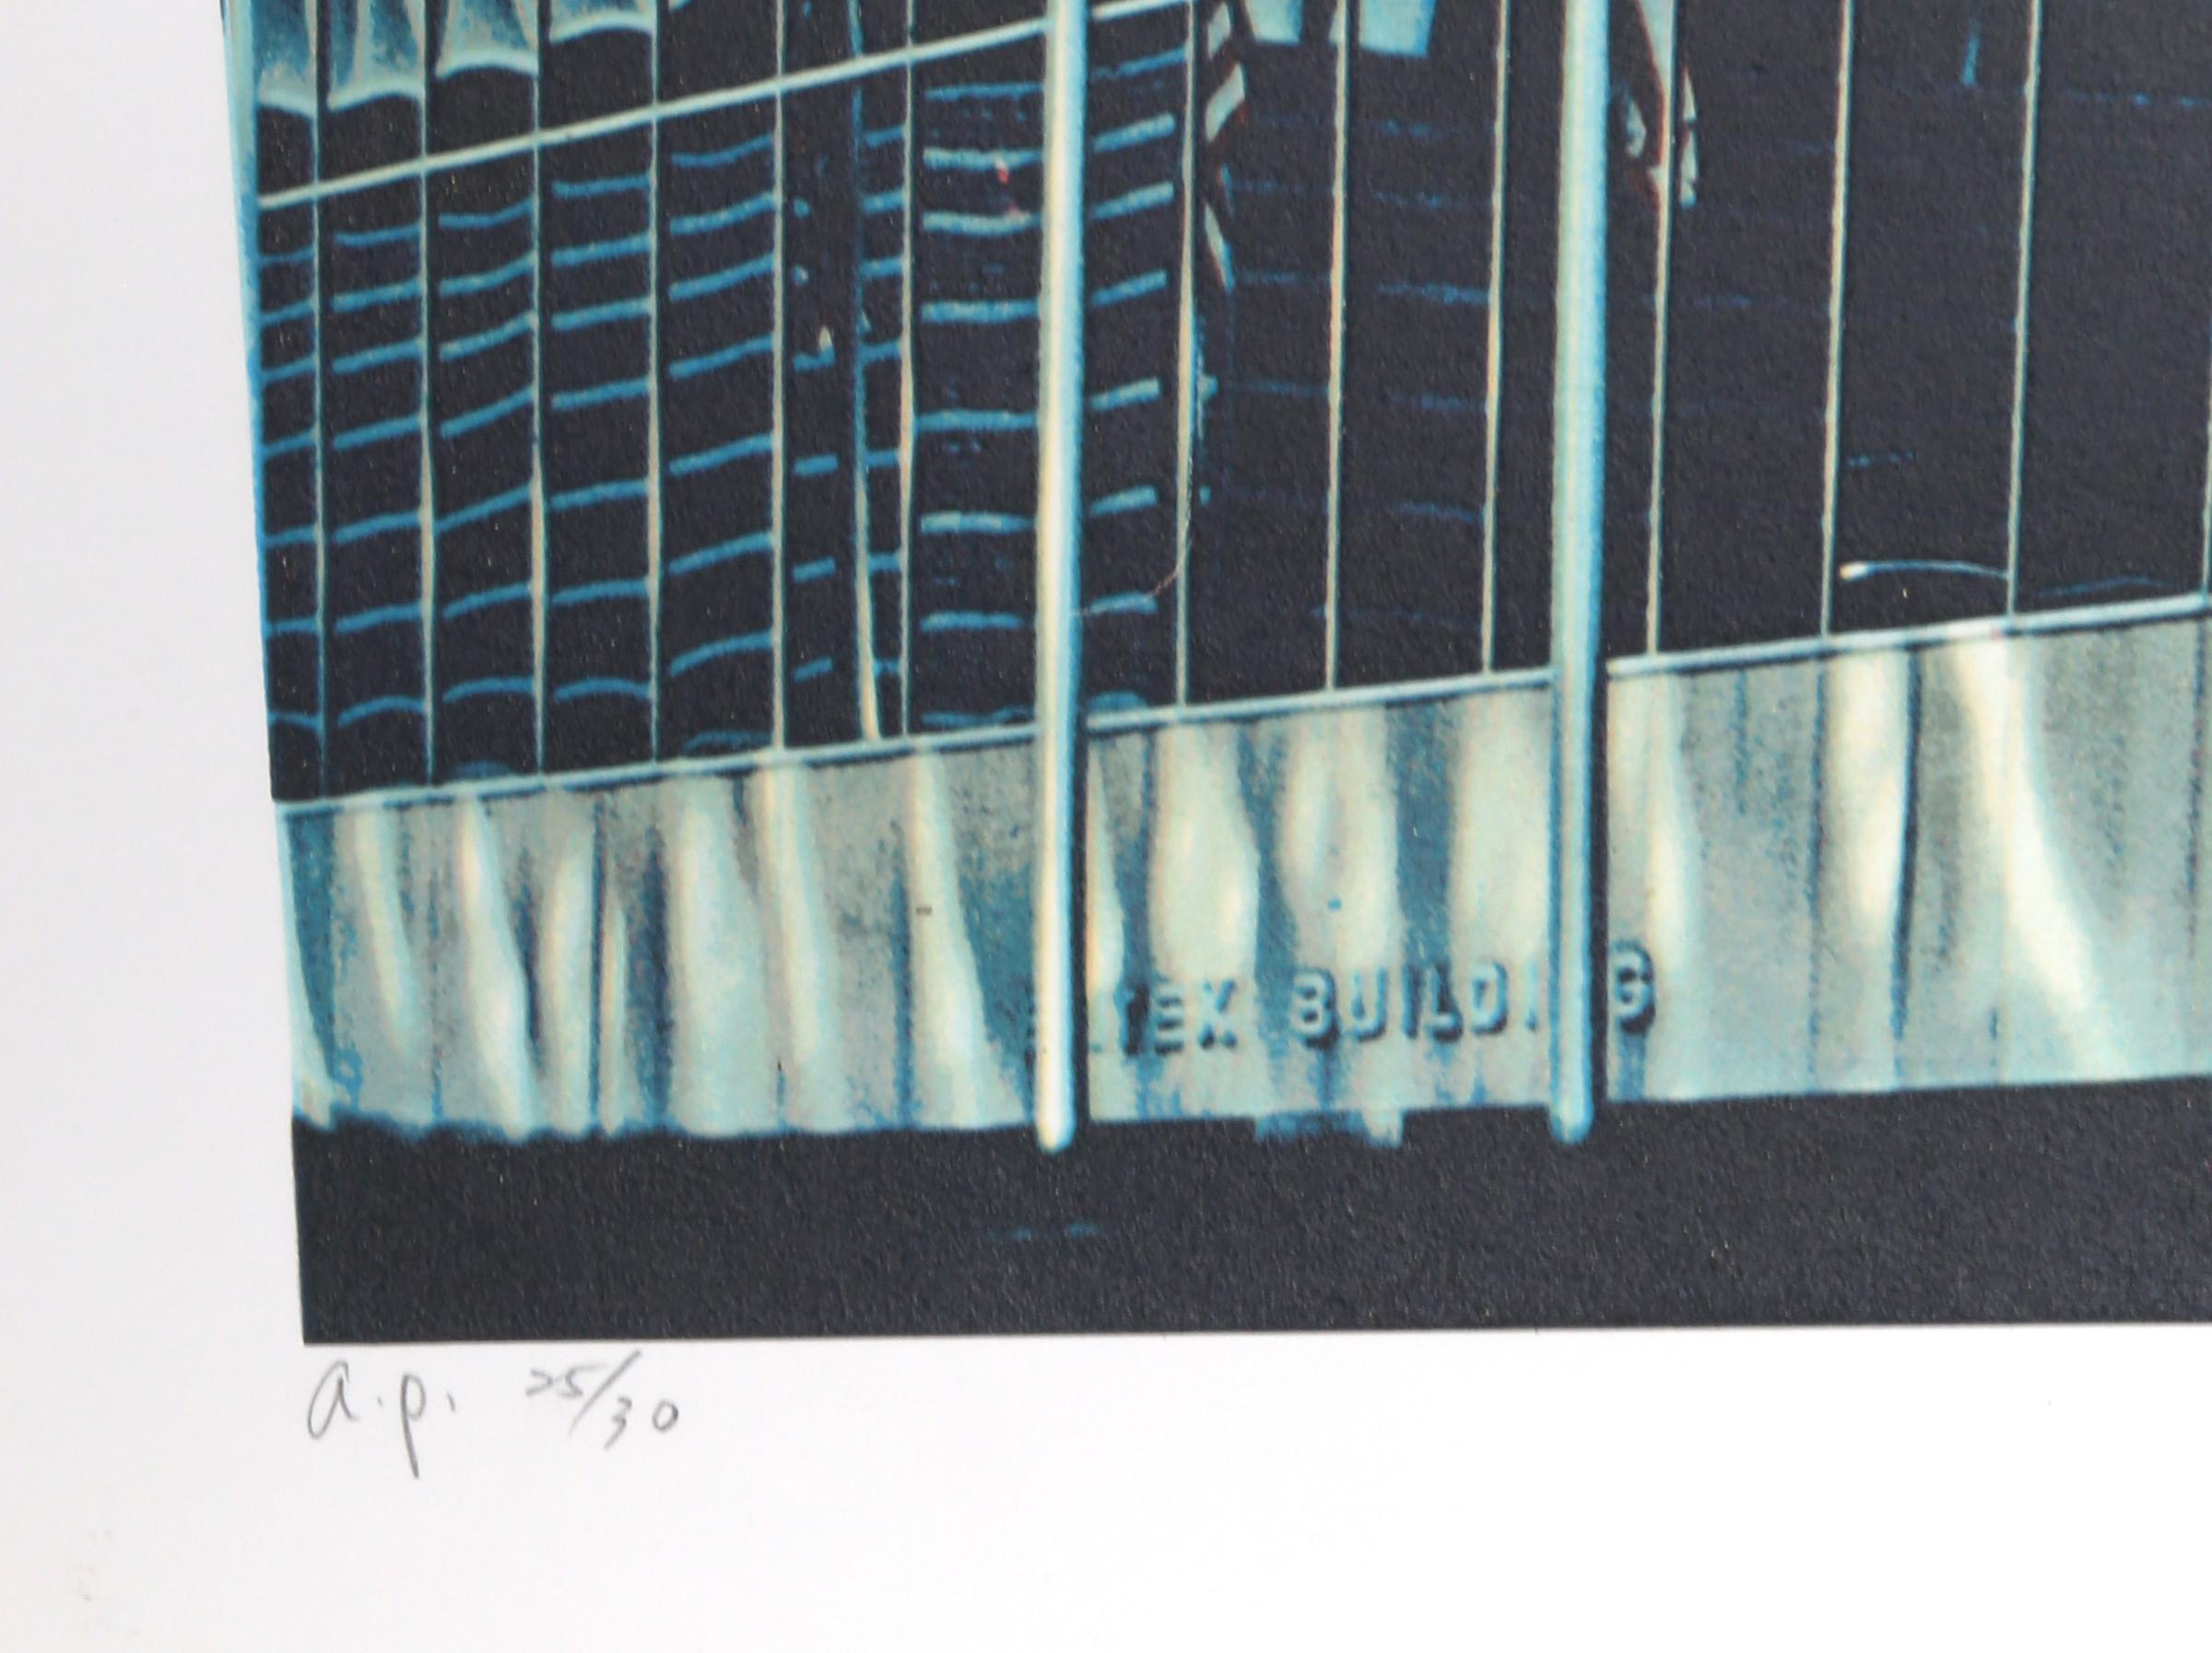 Entex Building, Photorealist Screenprint by Ching Jang Yao - Print by C.J. (Ching Jang) Yao